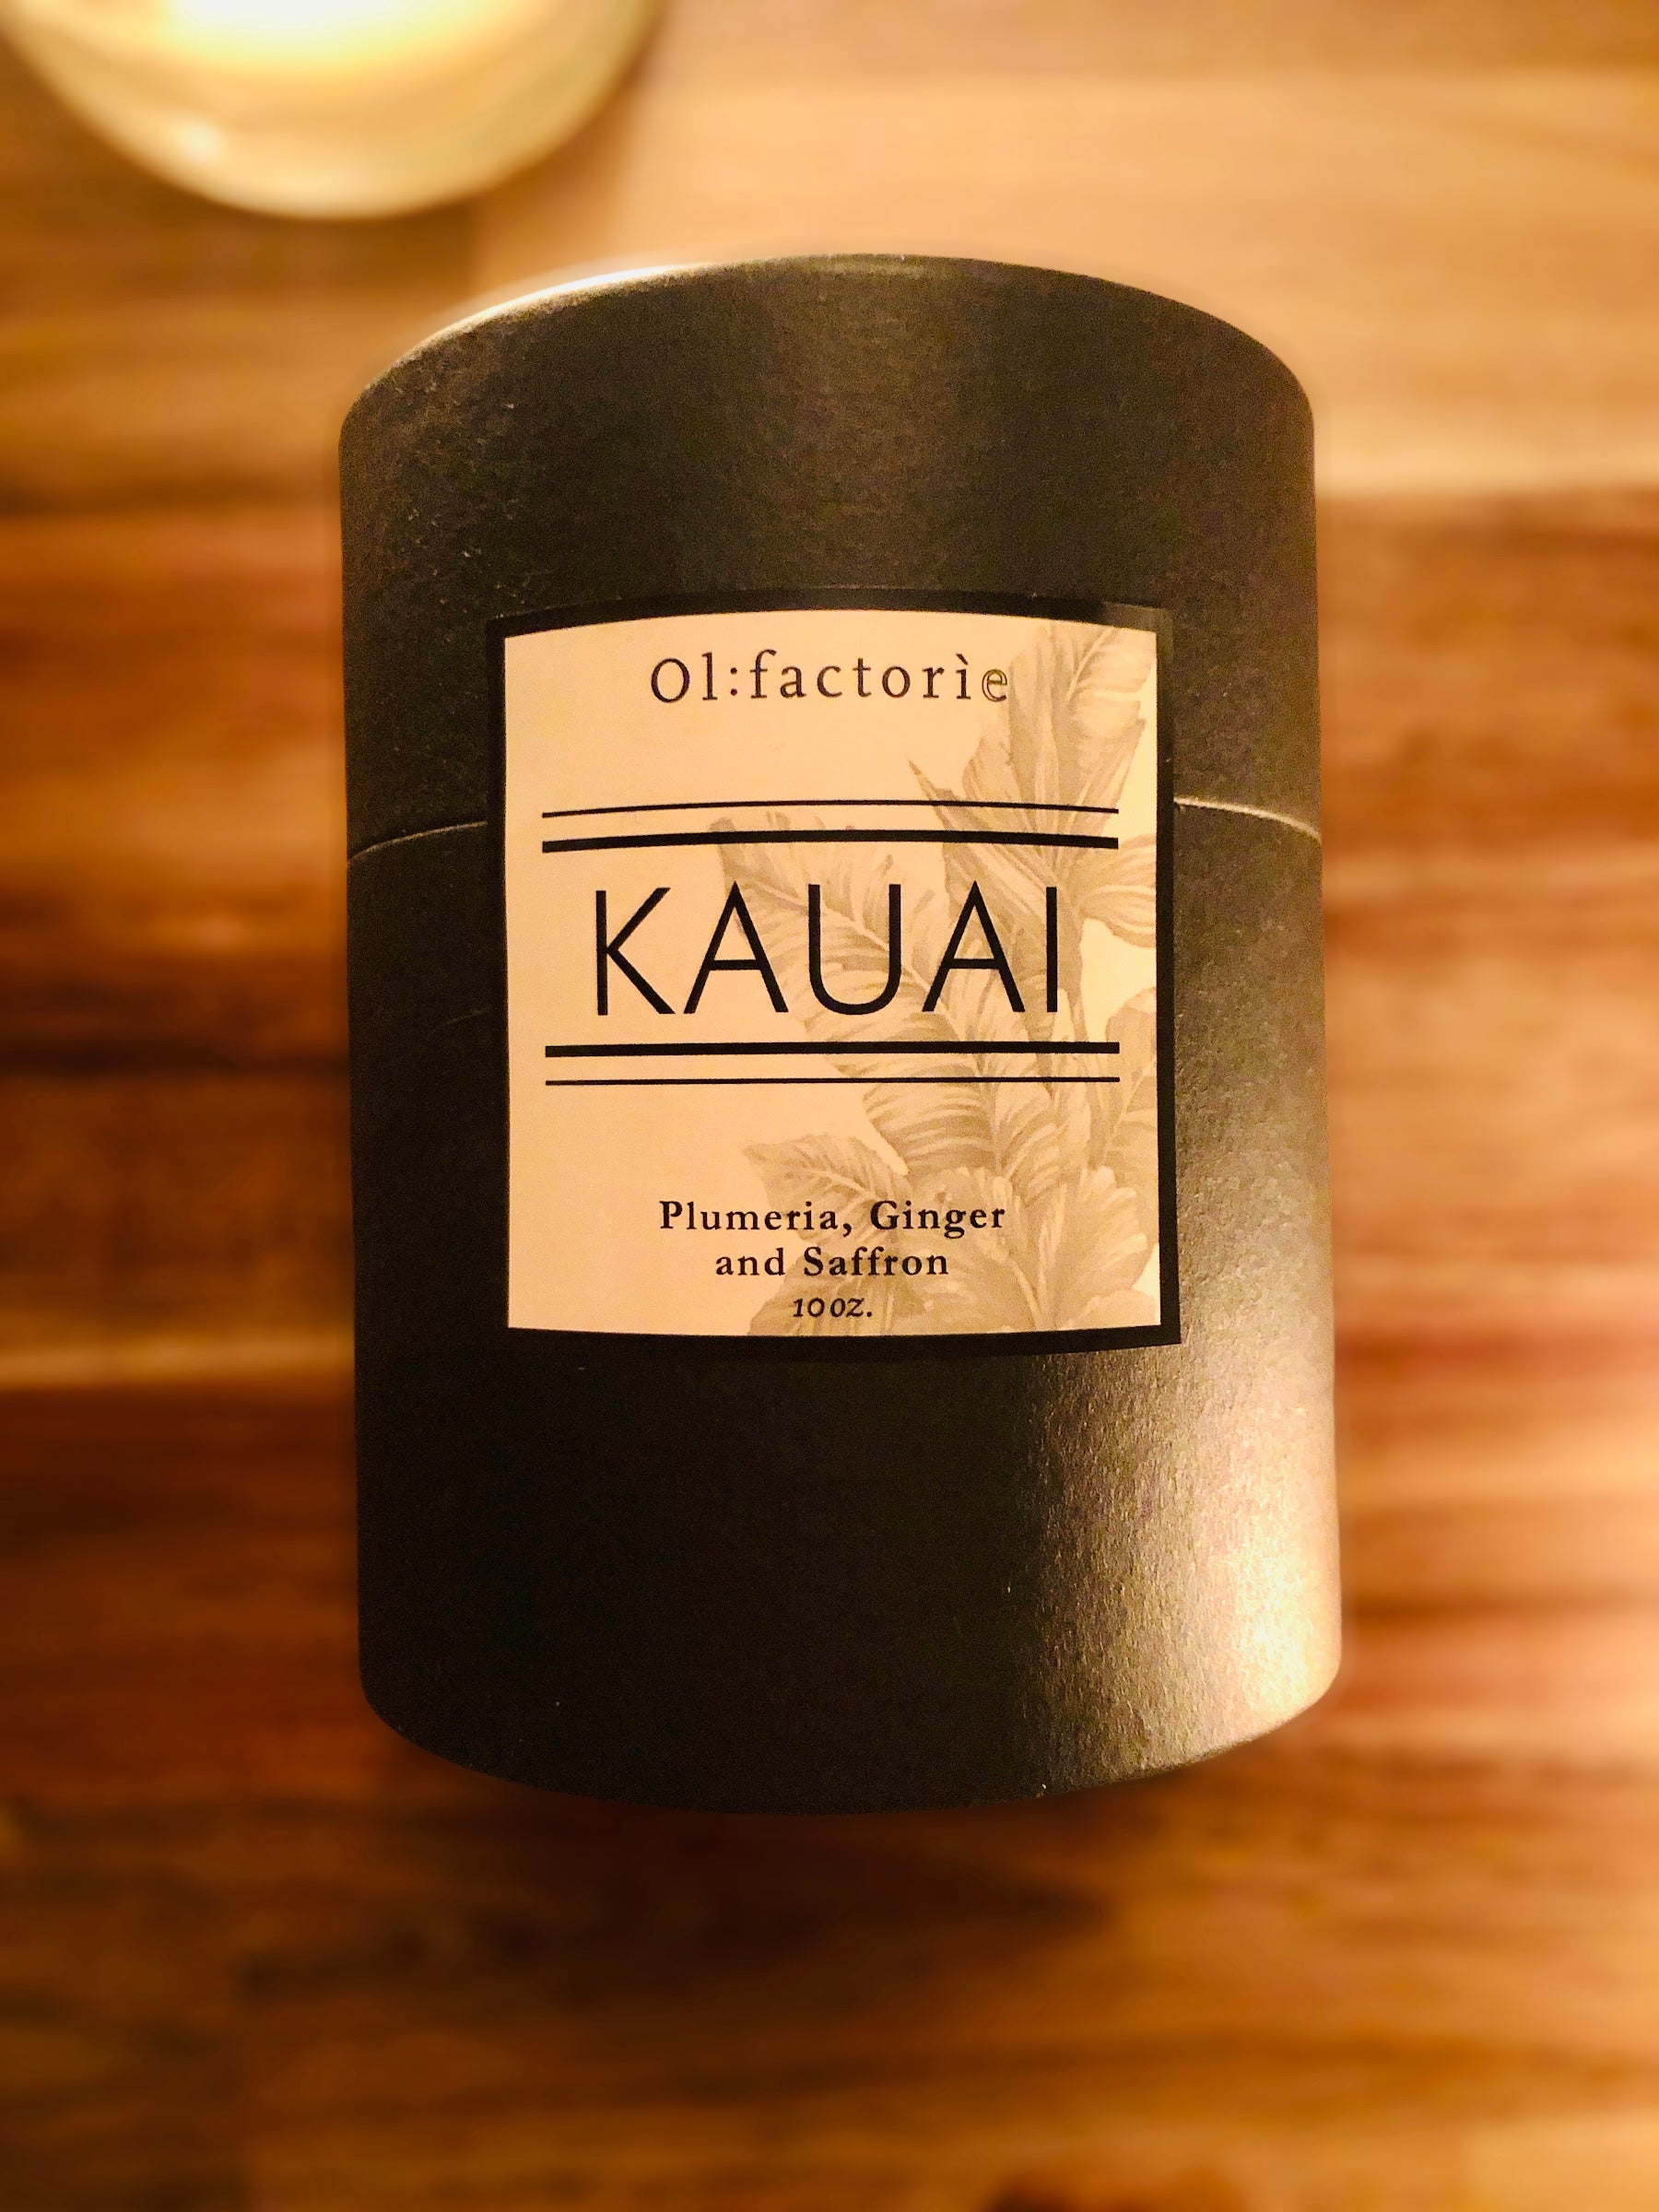 Kauai Candle - Olfactorie Candles + Apothecary Boutique